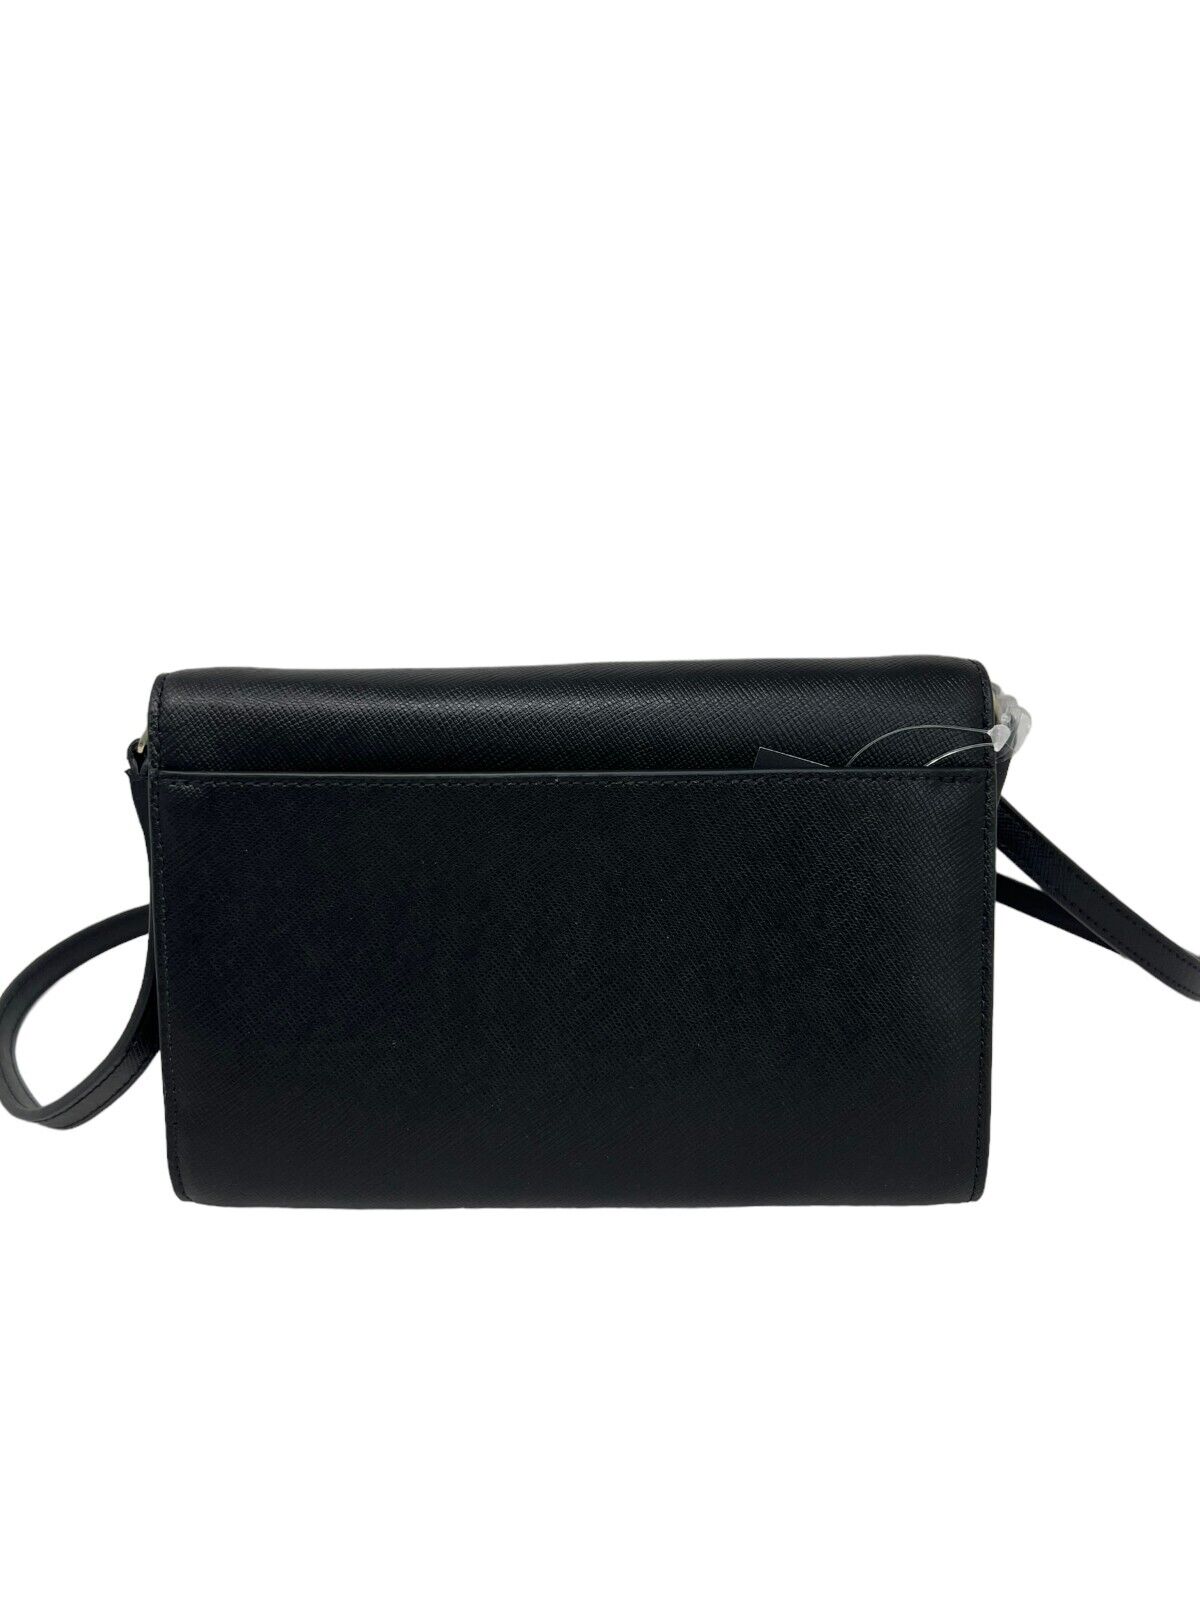 Kate Spade Perry Saffiano Leather Black Crossbody Bag K8709